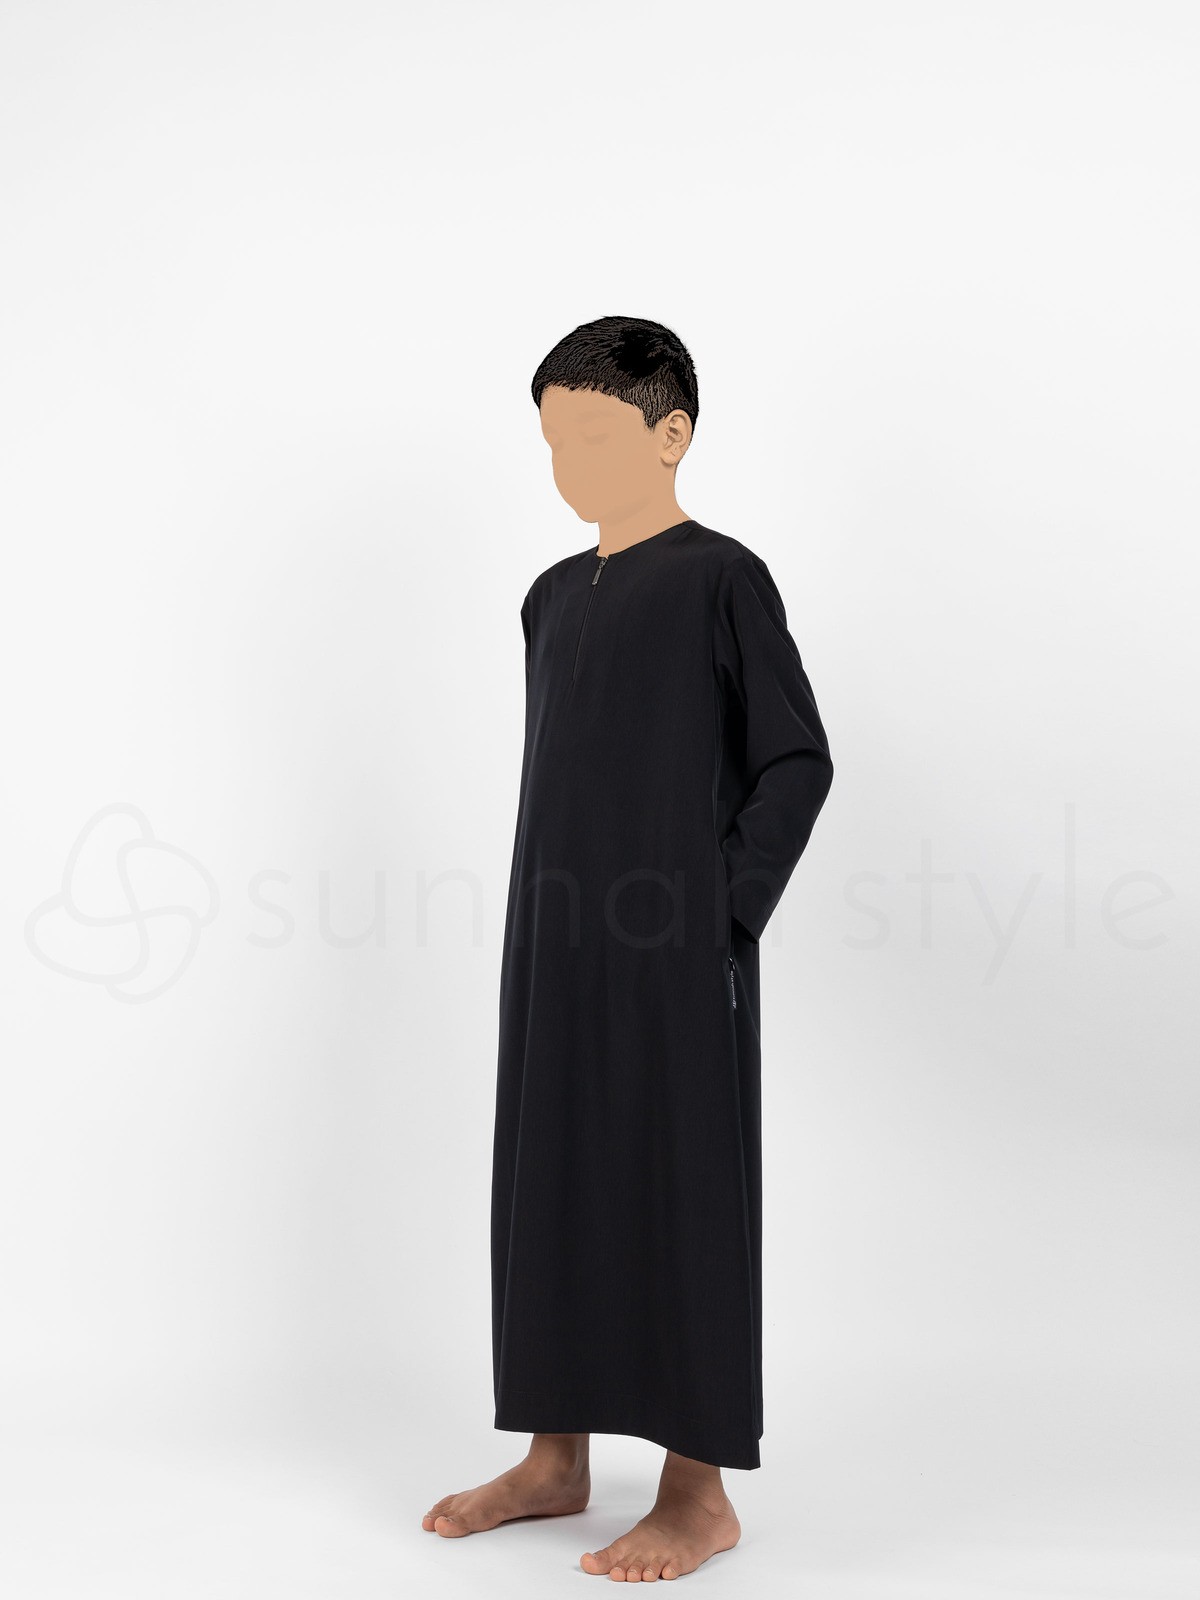 Sunnah Style - Boys Short Zip Thobe  - Child (Black)